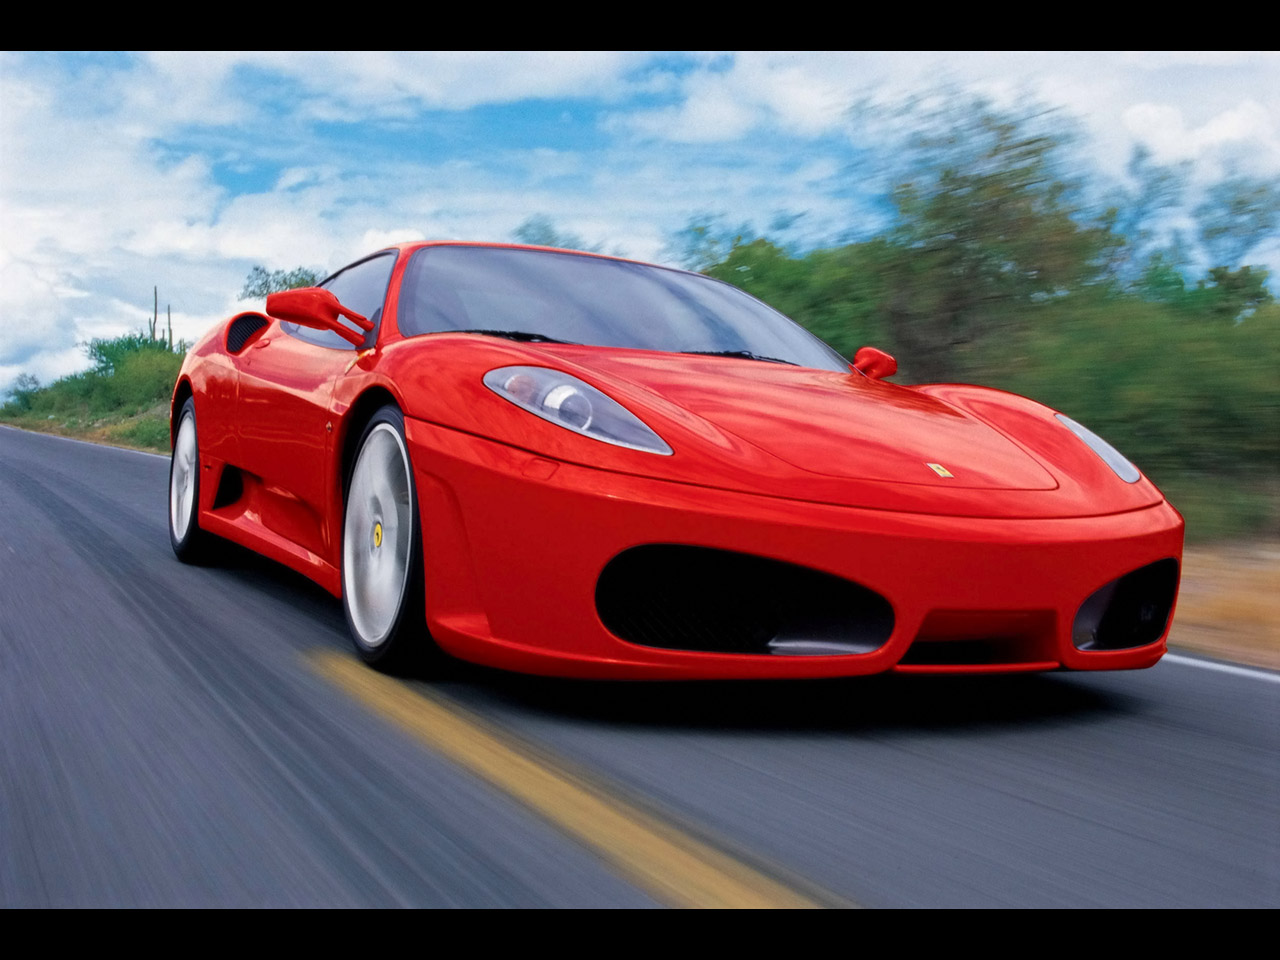 Sports Ferrari Car Wallpaper Image Pictures Gallery Photo